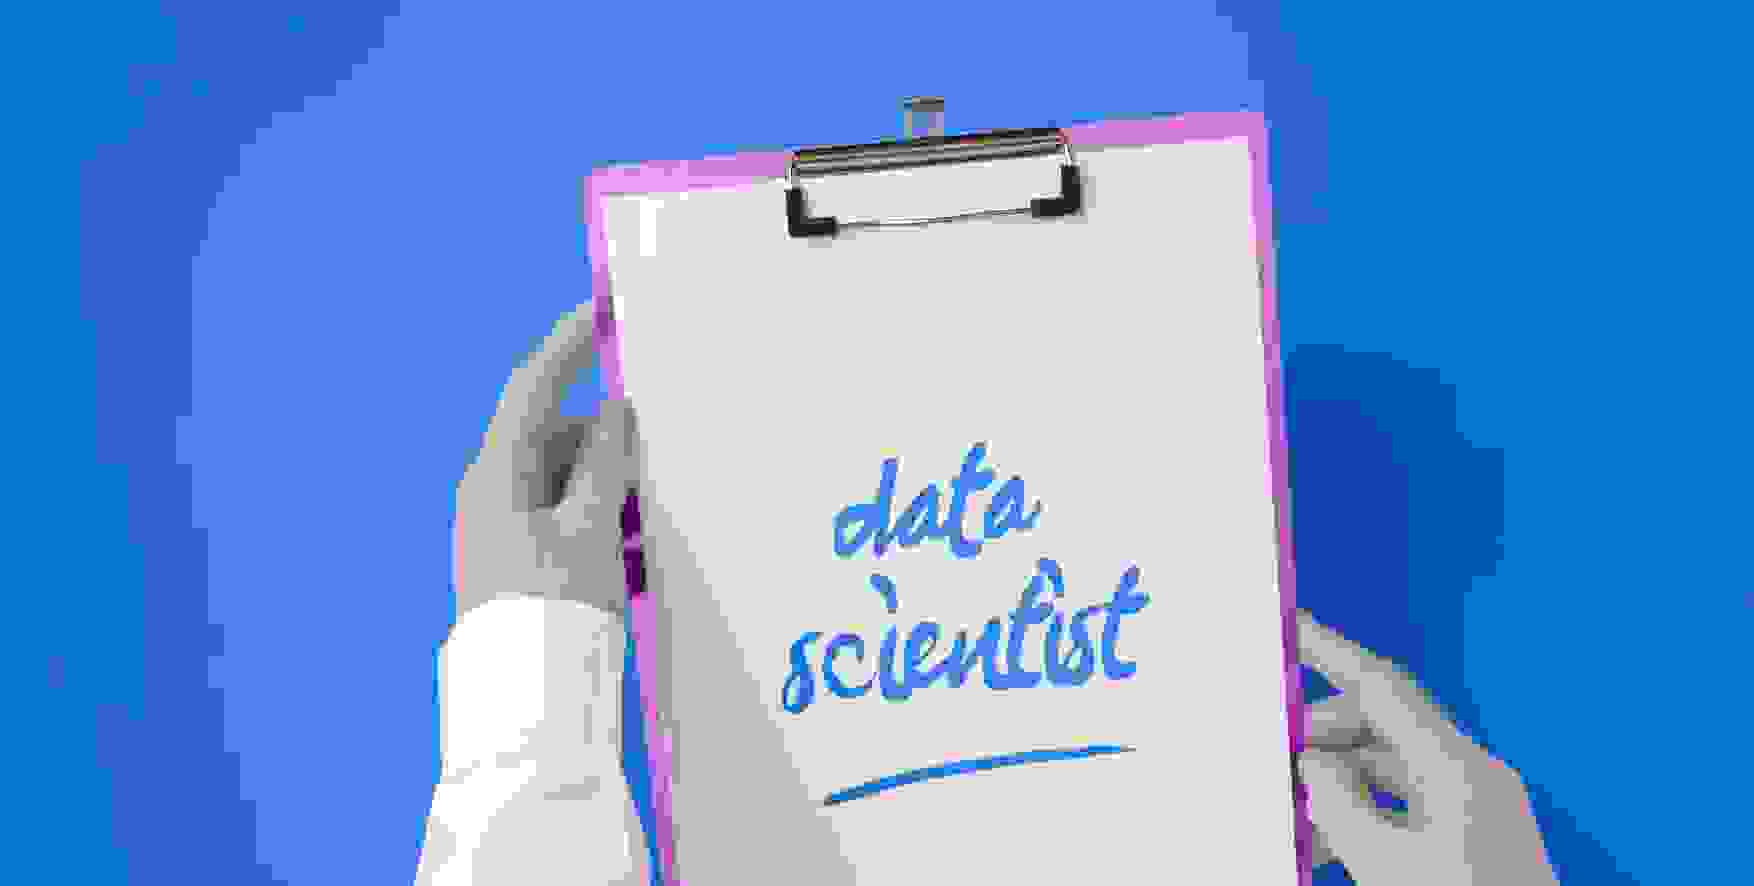 data scientist written on a piece of paper in a clipboard